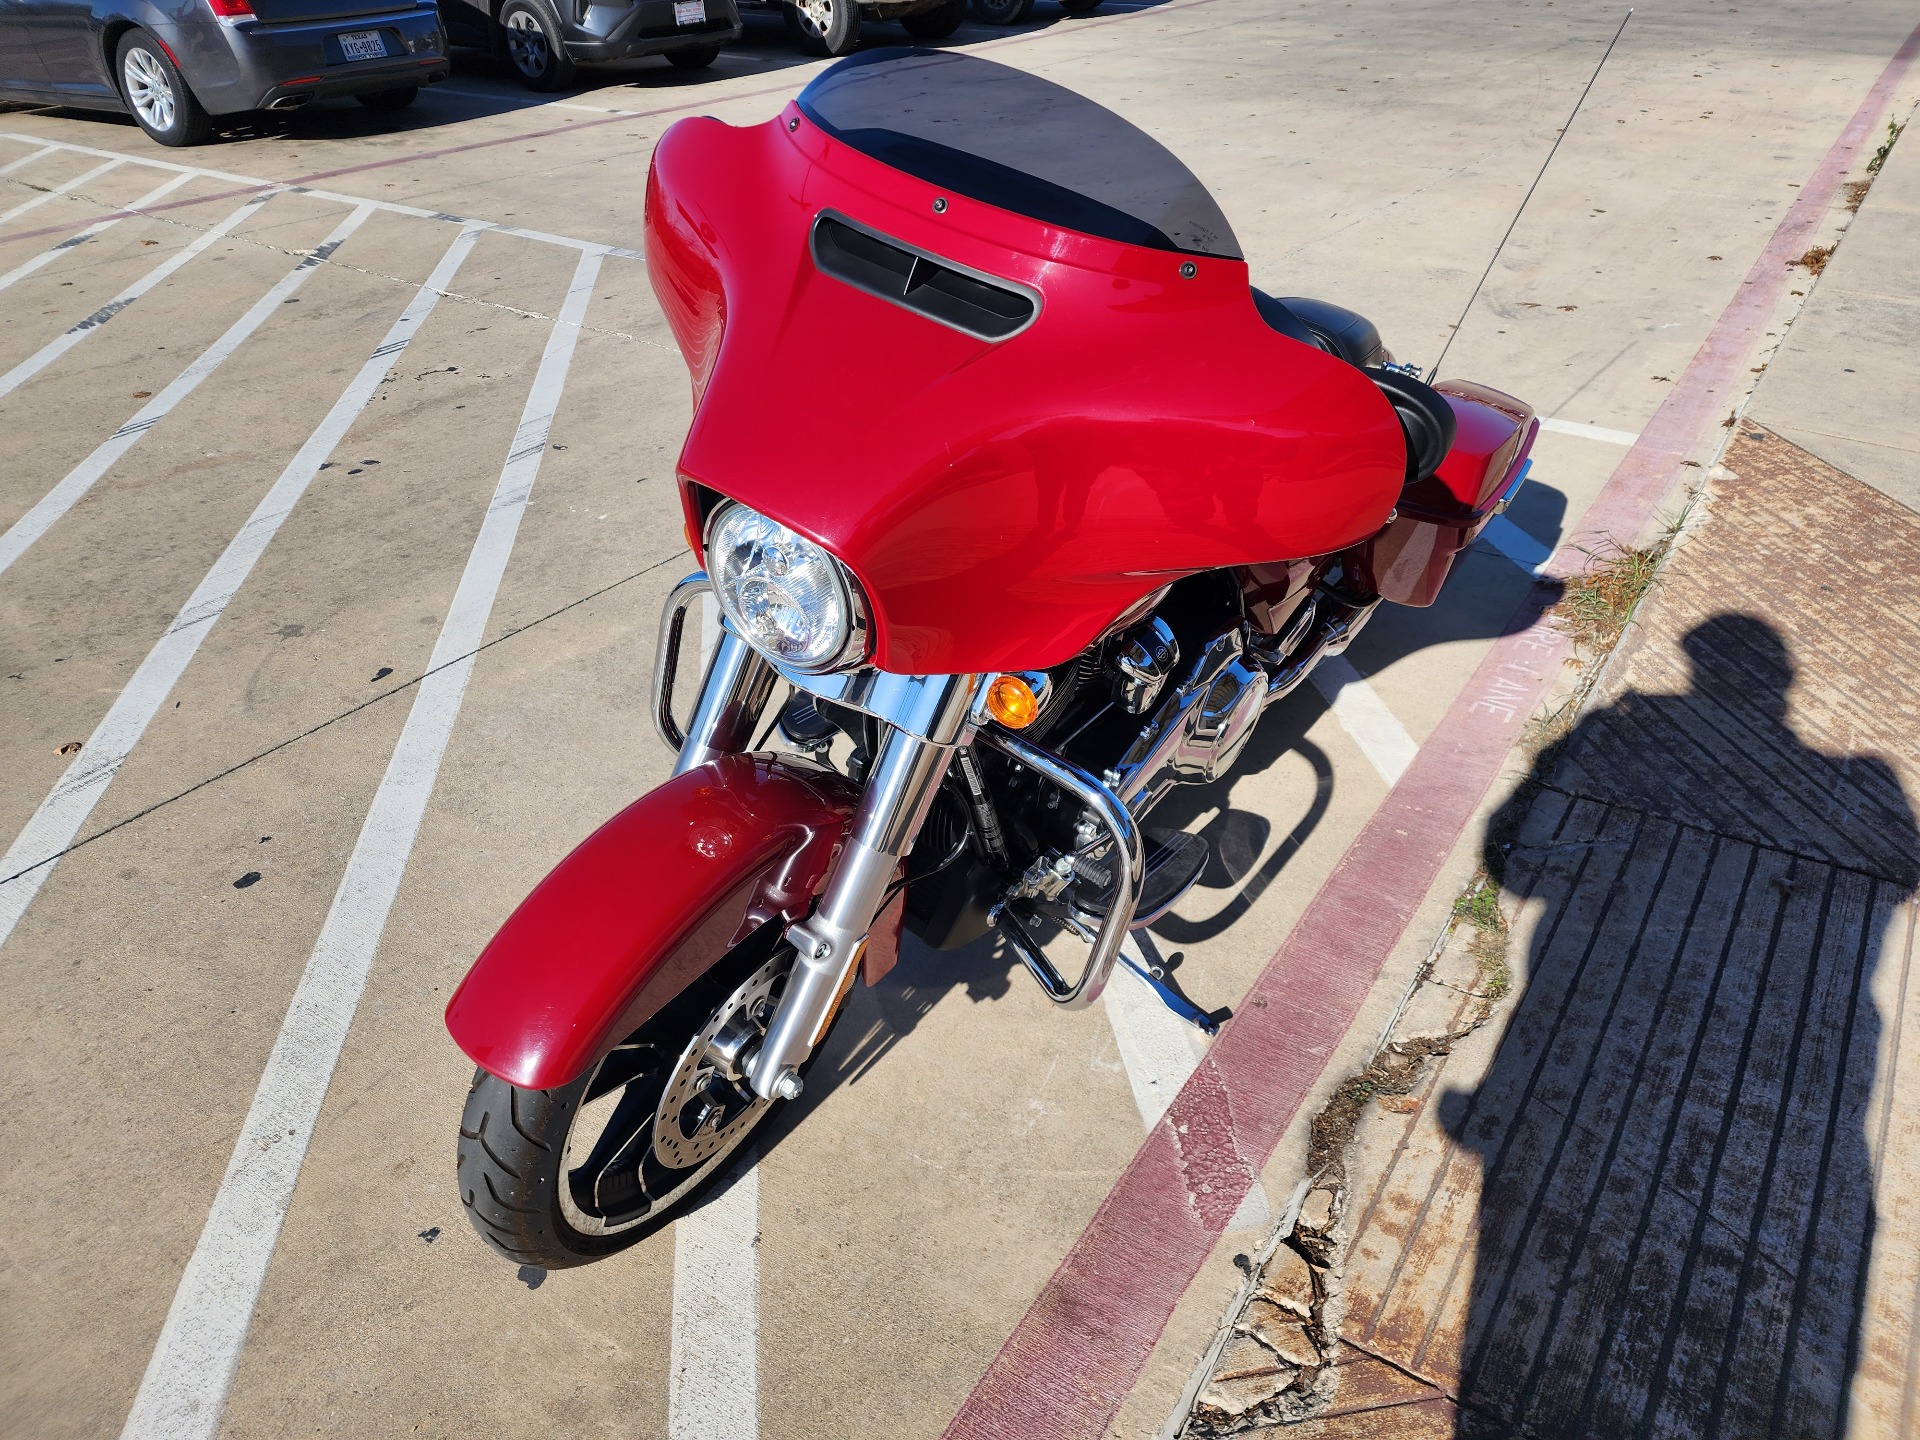 2021 Harley-Davidson Street Glide® in San Antonio, Texas - Photo 4